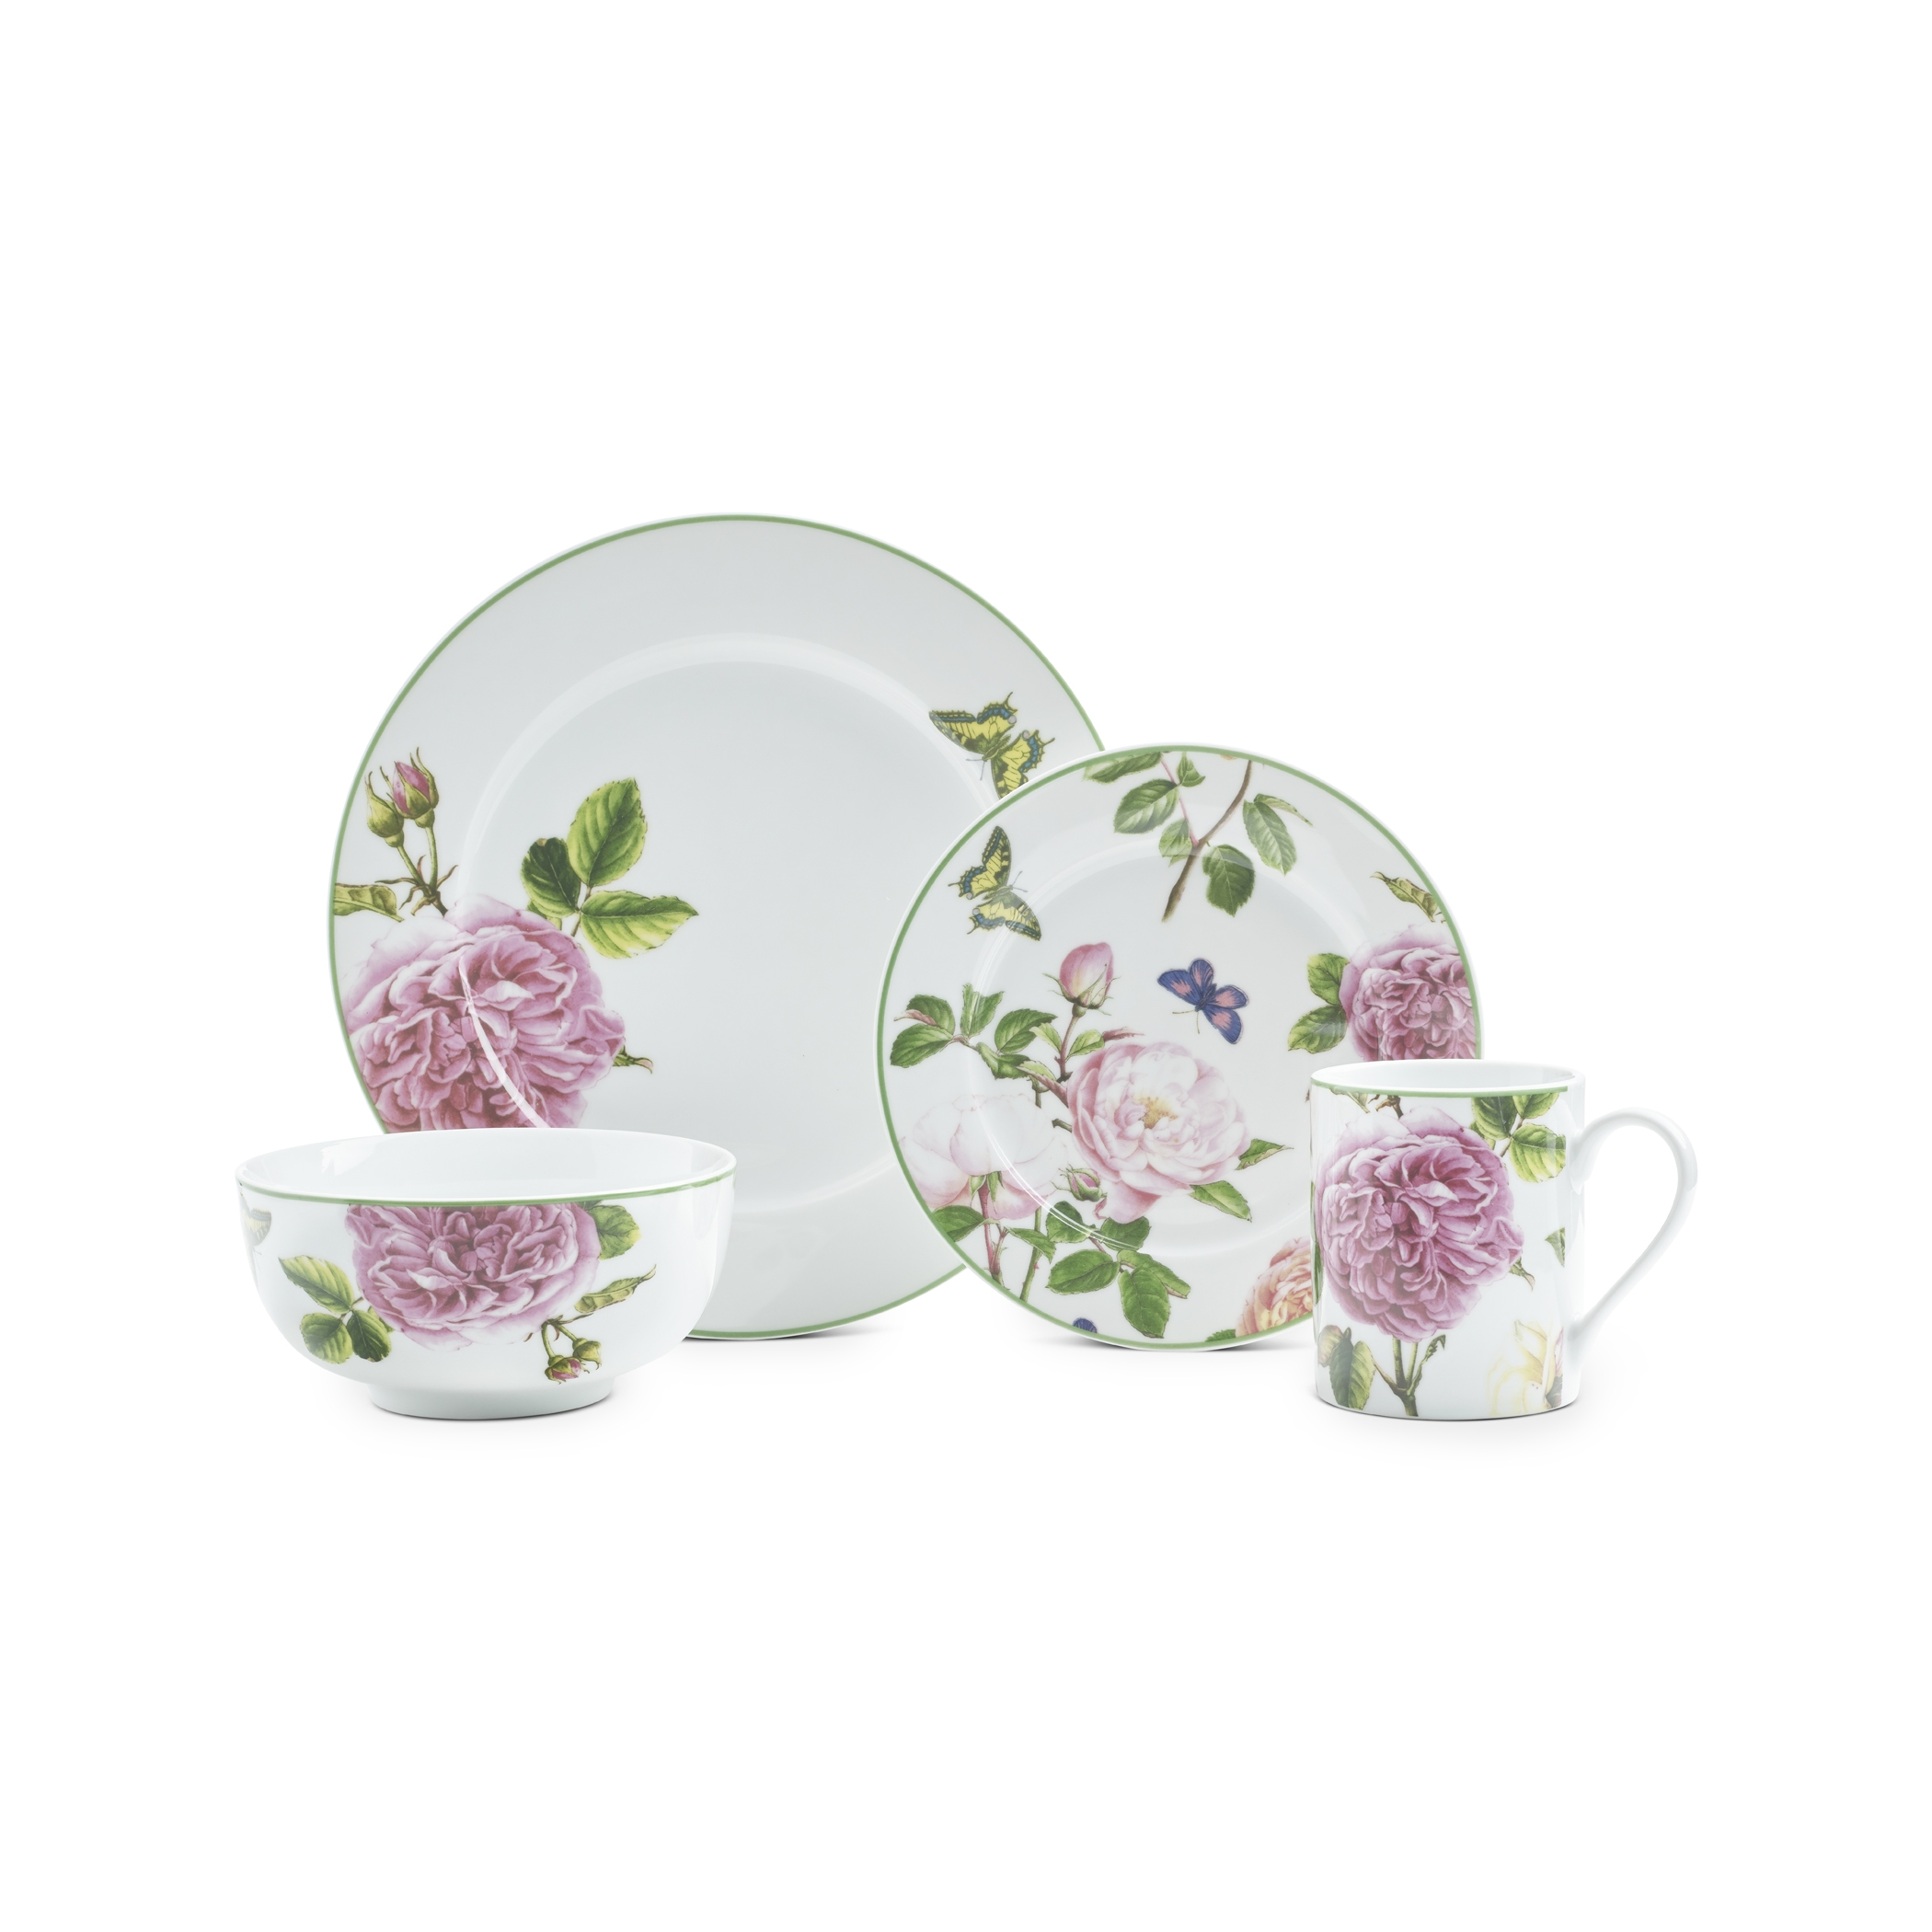 Spode Home Roses 16 Piece Dinnerware Set, Service for 4, Made of Fine Porcelain, Dishwasher Safe - image 5 of 5